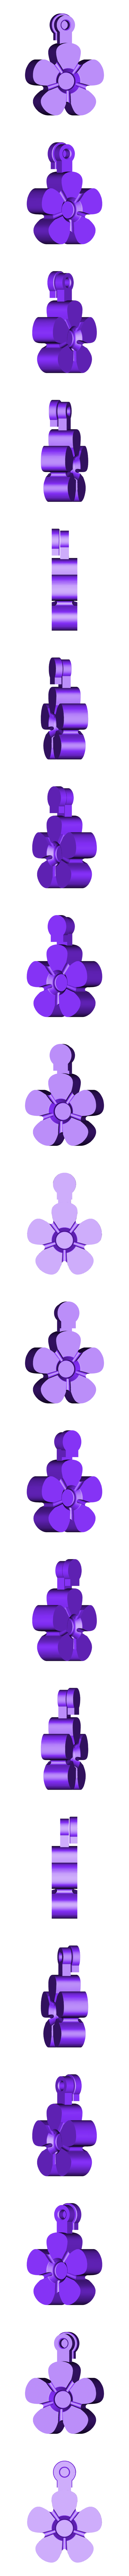 flower_fob_-_solid_.stl Download free STL file Flower Fobs... Flower Key Fobs that Spin! • 3D printer design, Muzz64